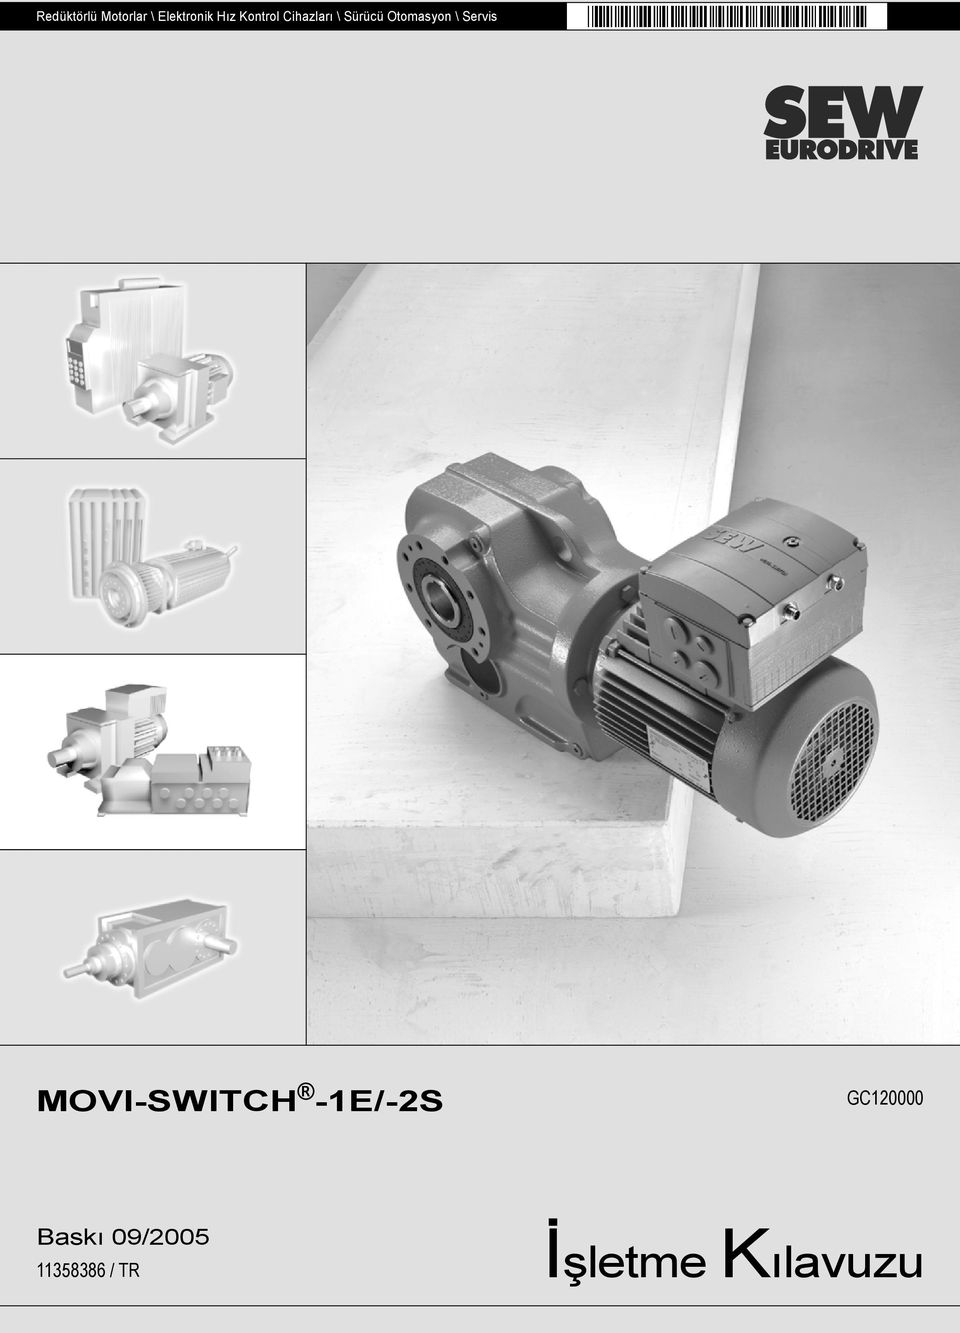 \ MOVI-SWITCH -1E/-2S GC120000 Baskı